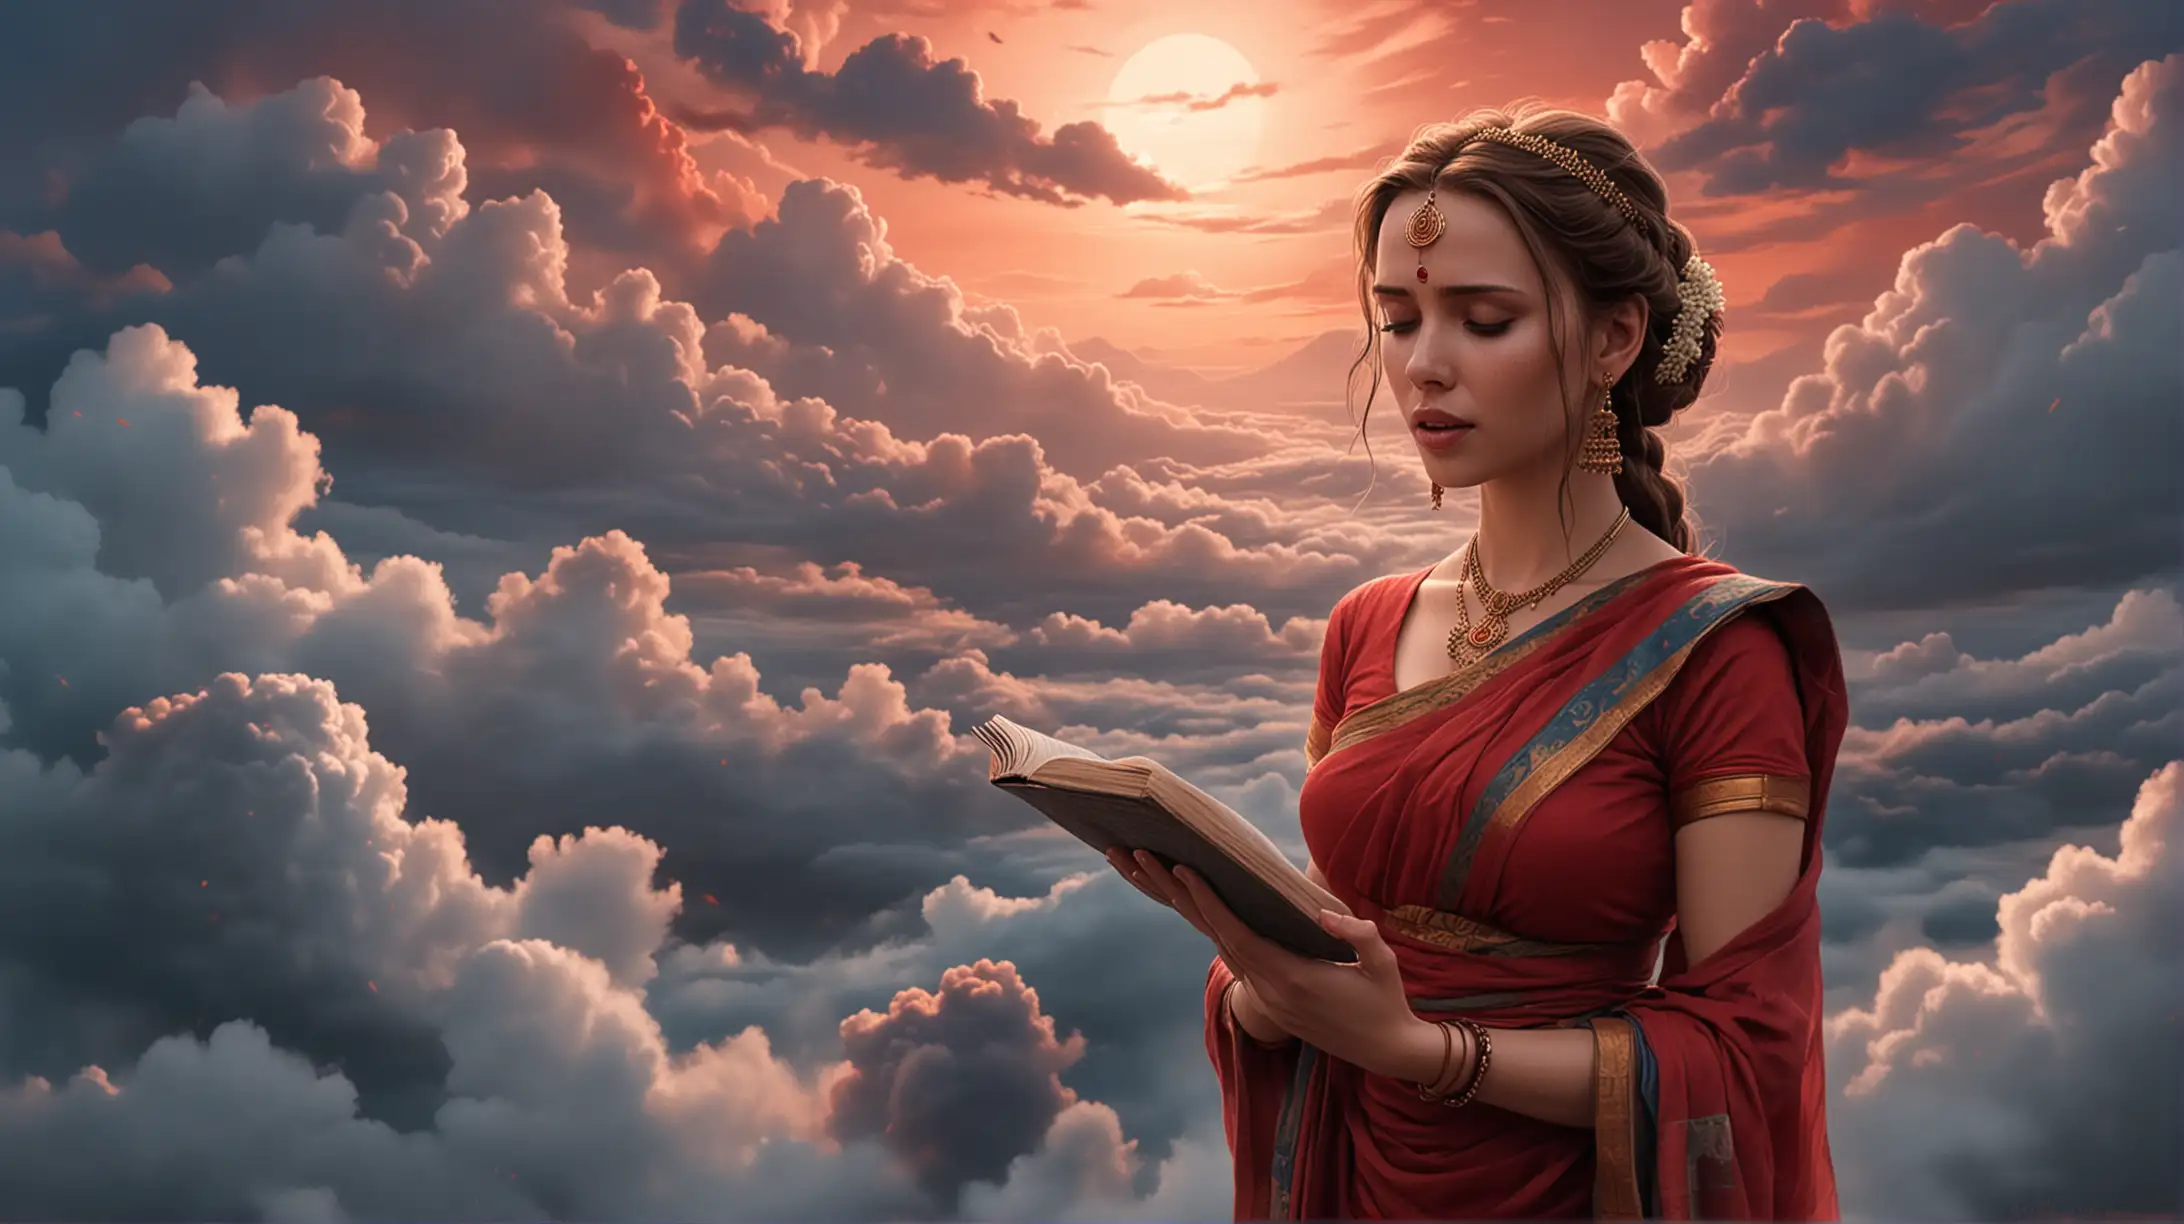 Cartoon Scarlett Johansson as Indian Girl Reading Rig Veda Mantras in Azure Dress in Tibet